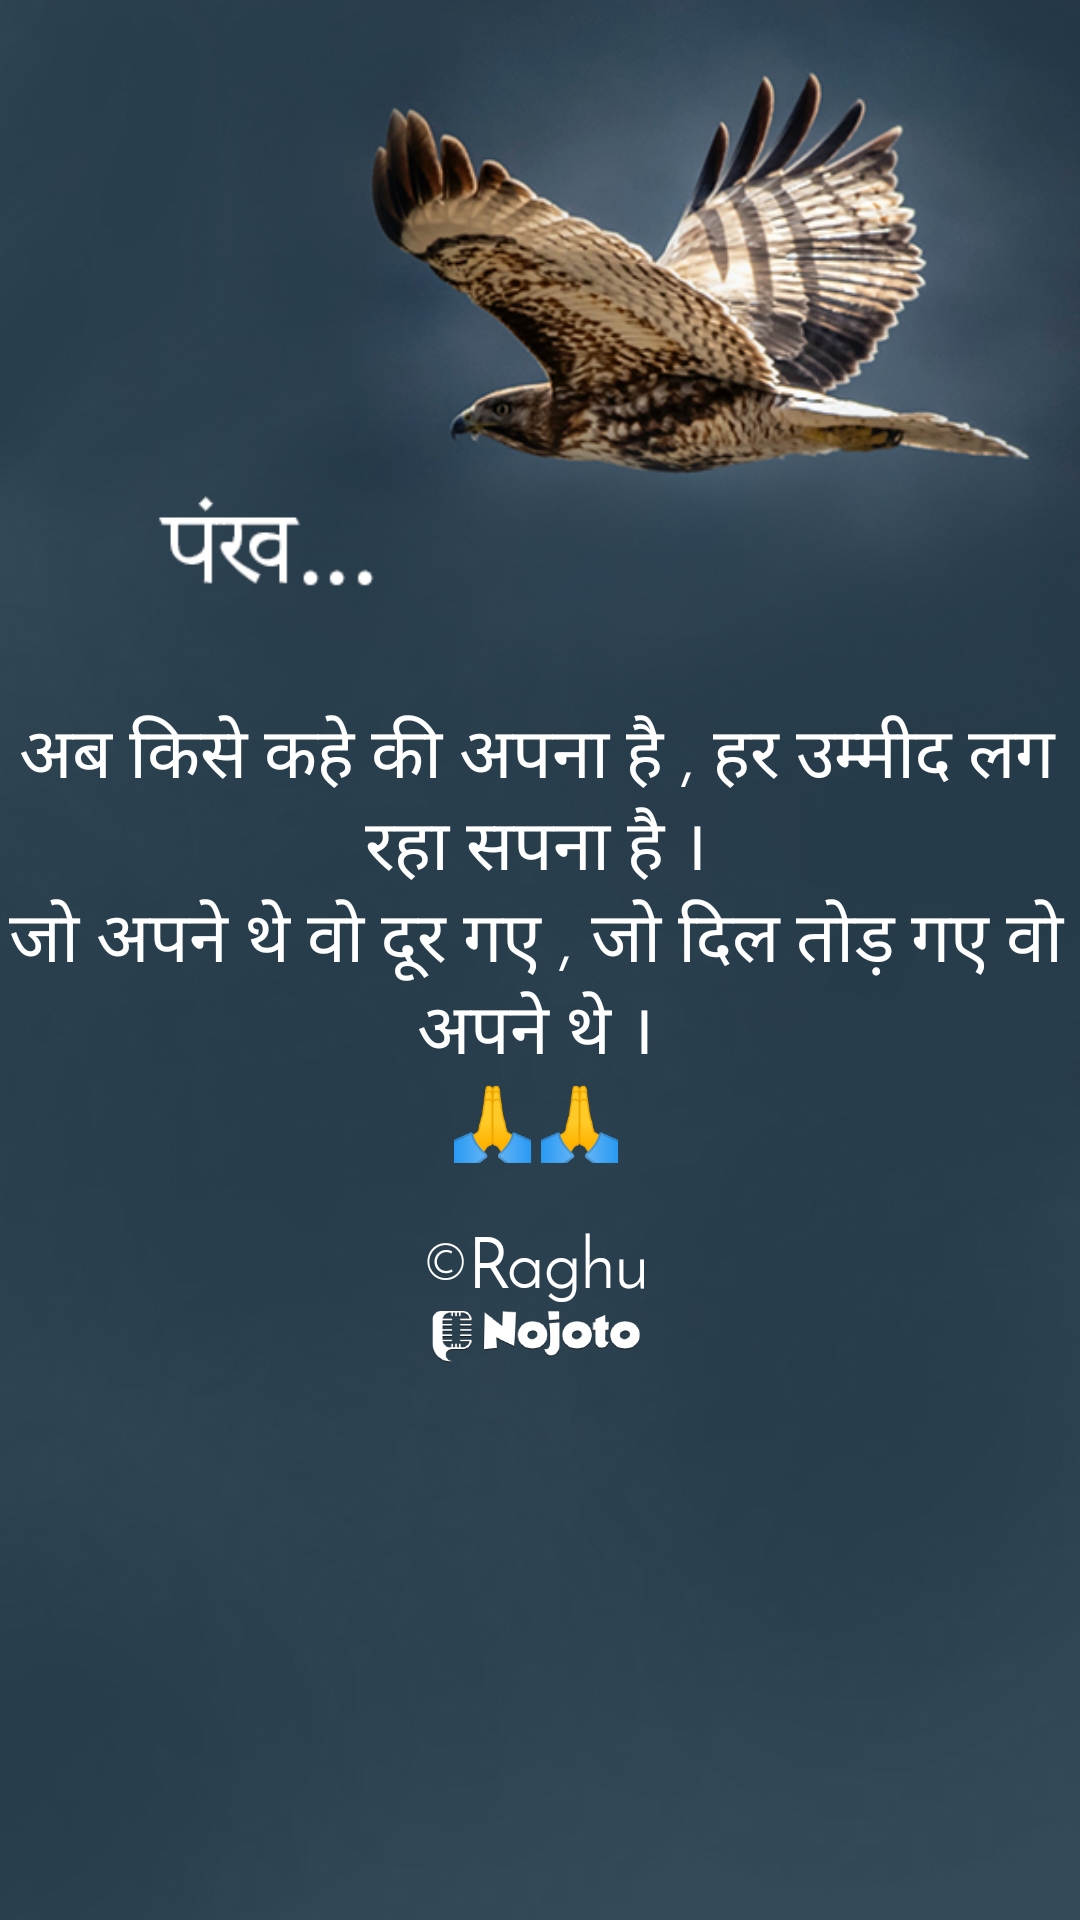 अच्छा लगेजो जरूर प्यार दीजिए
#शायरी #वायरल #Raghu #famous #कवि #लेखक#followme #Nojoto #goviral